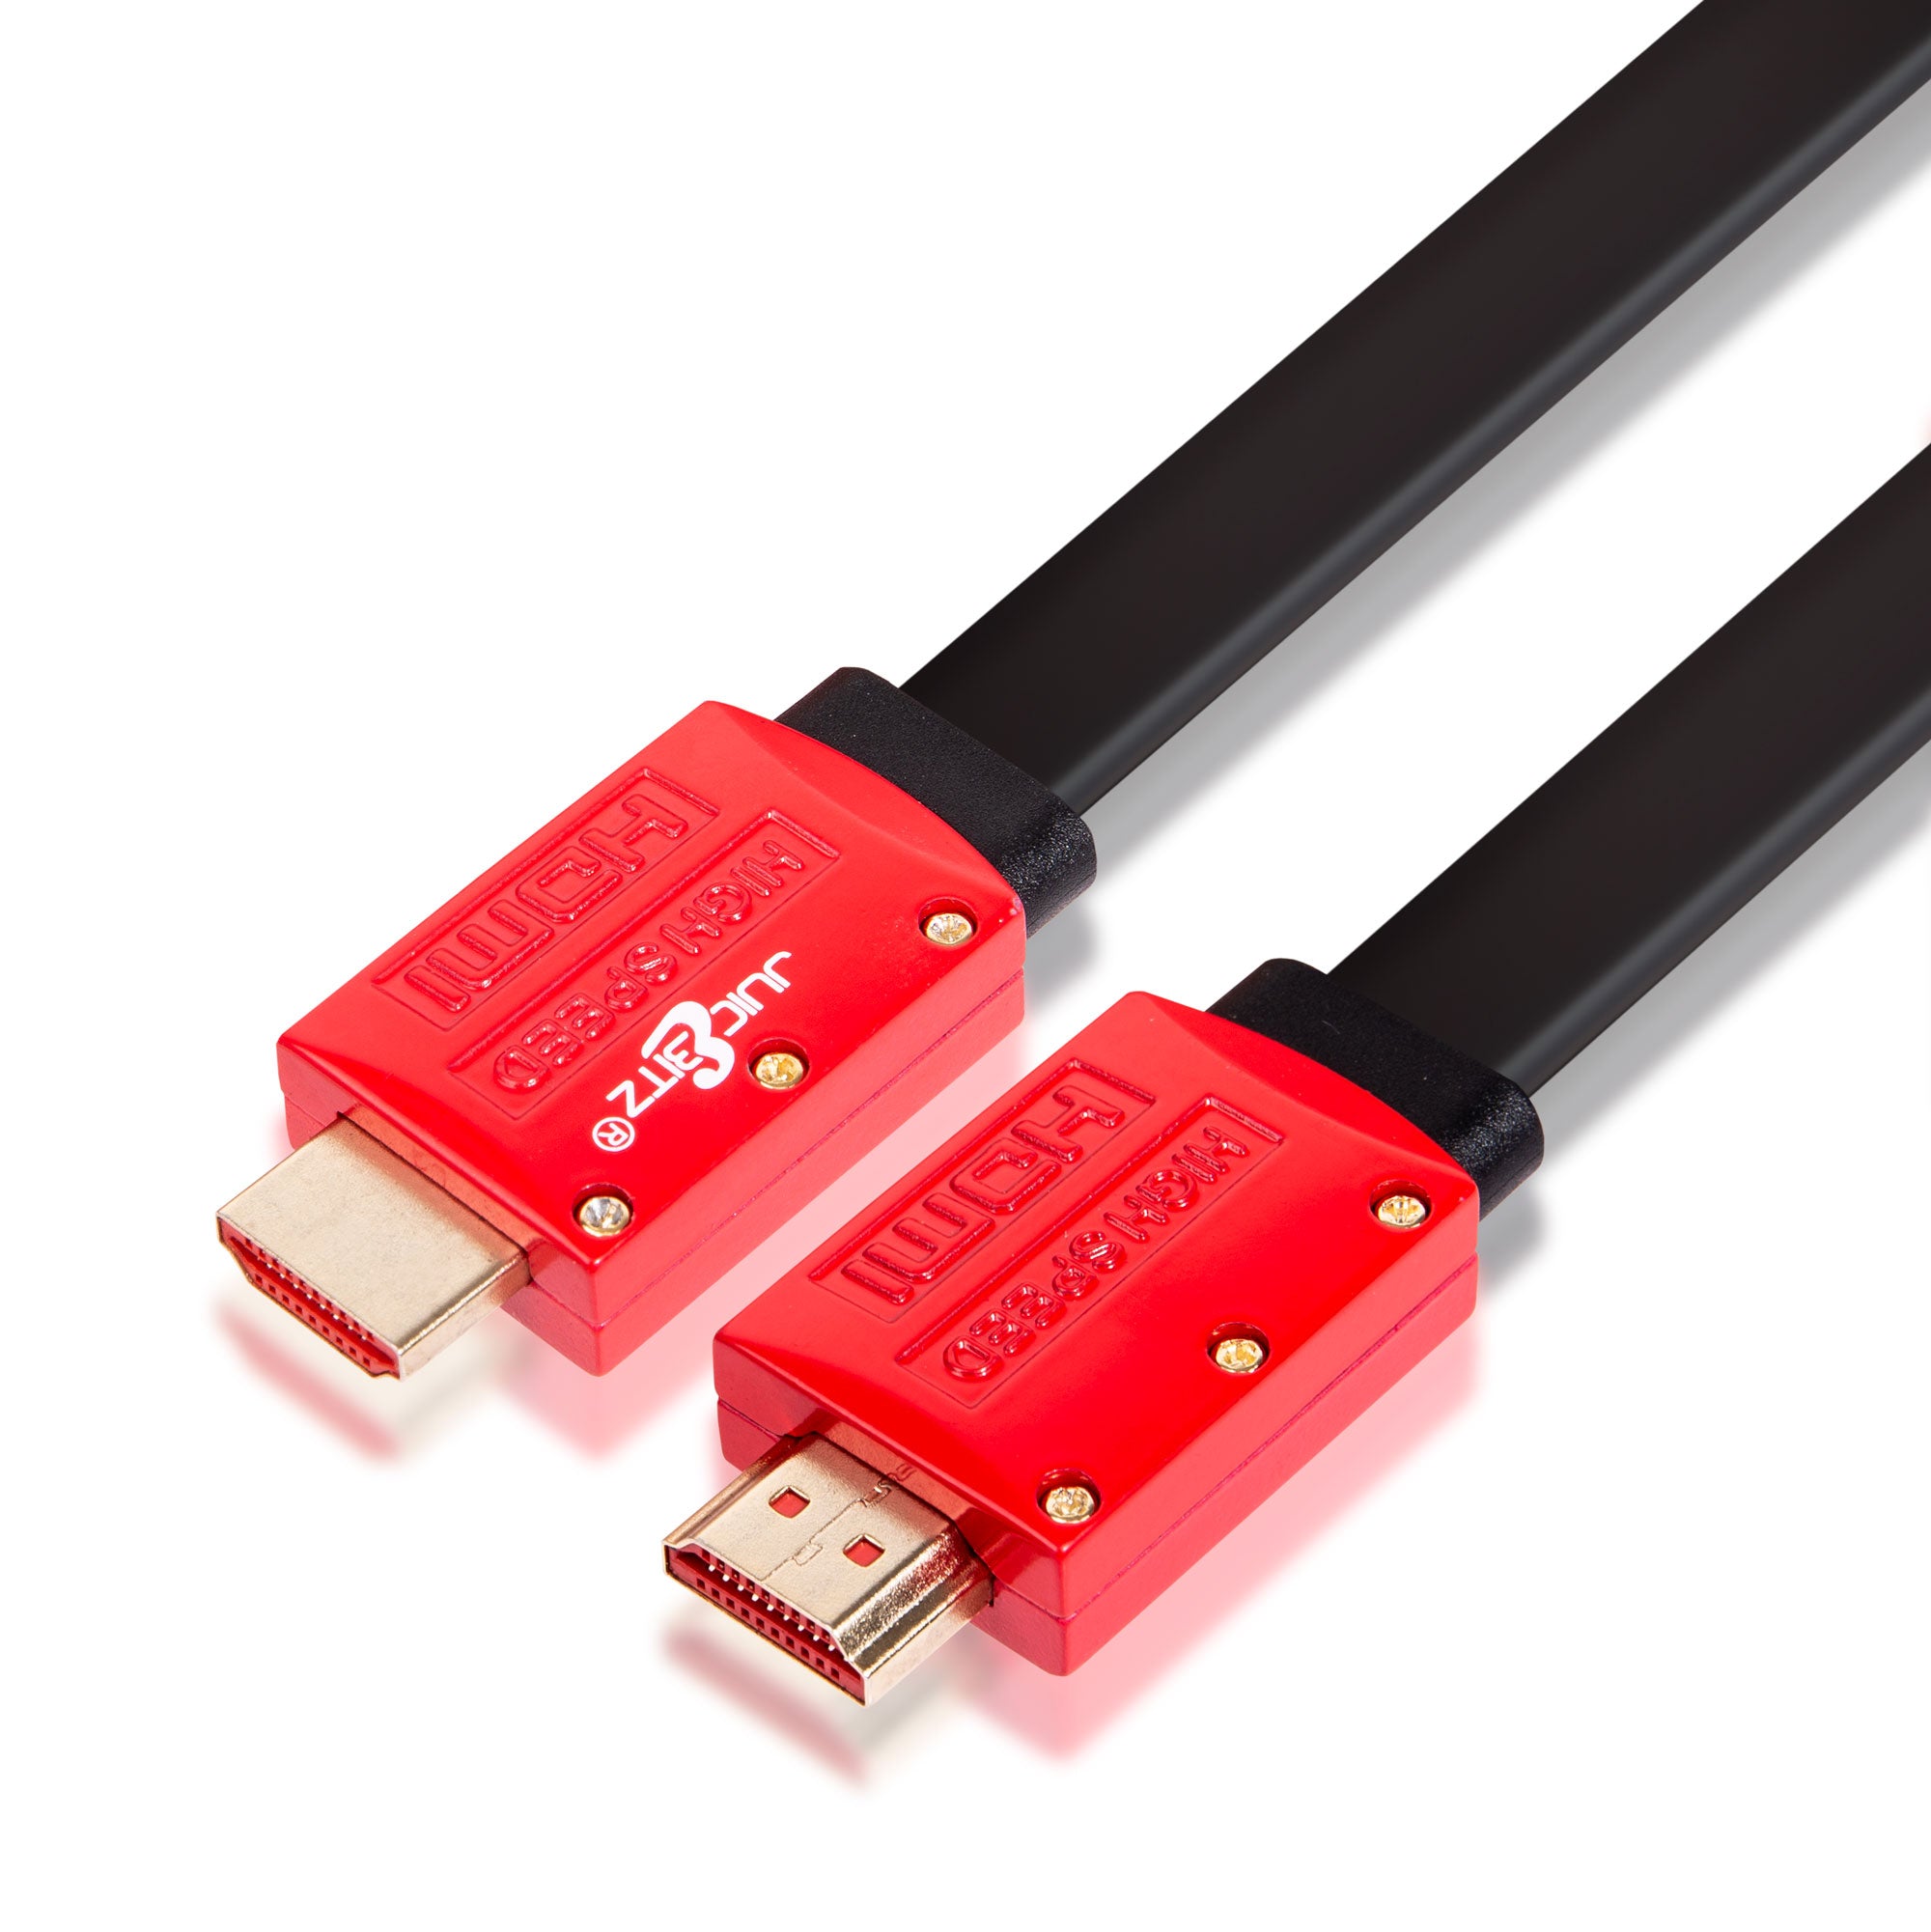 6m Flat HDMI Cable v2.0 Premium High Quality HDCP 2.2 Video Lead